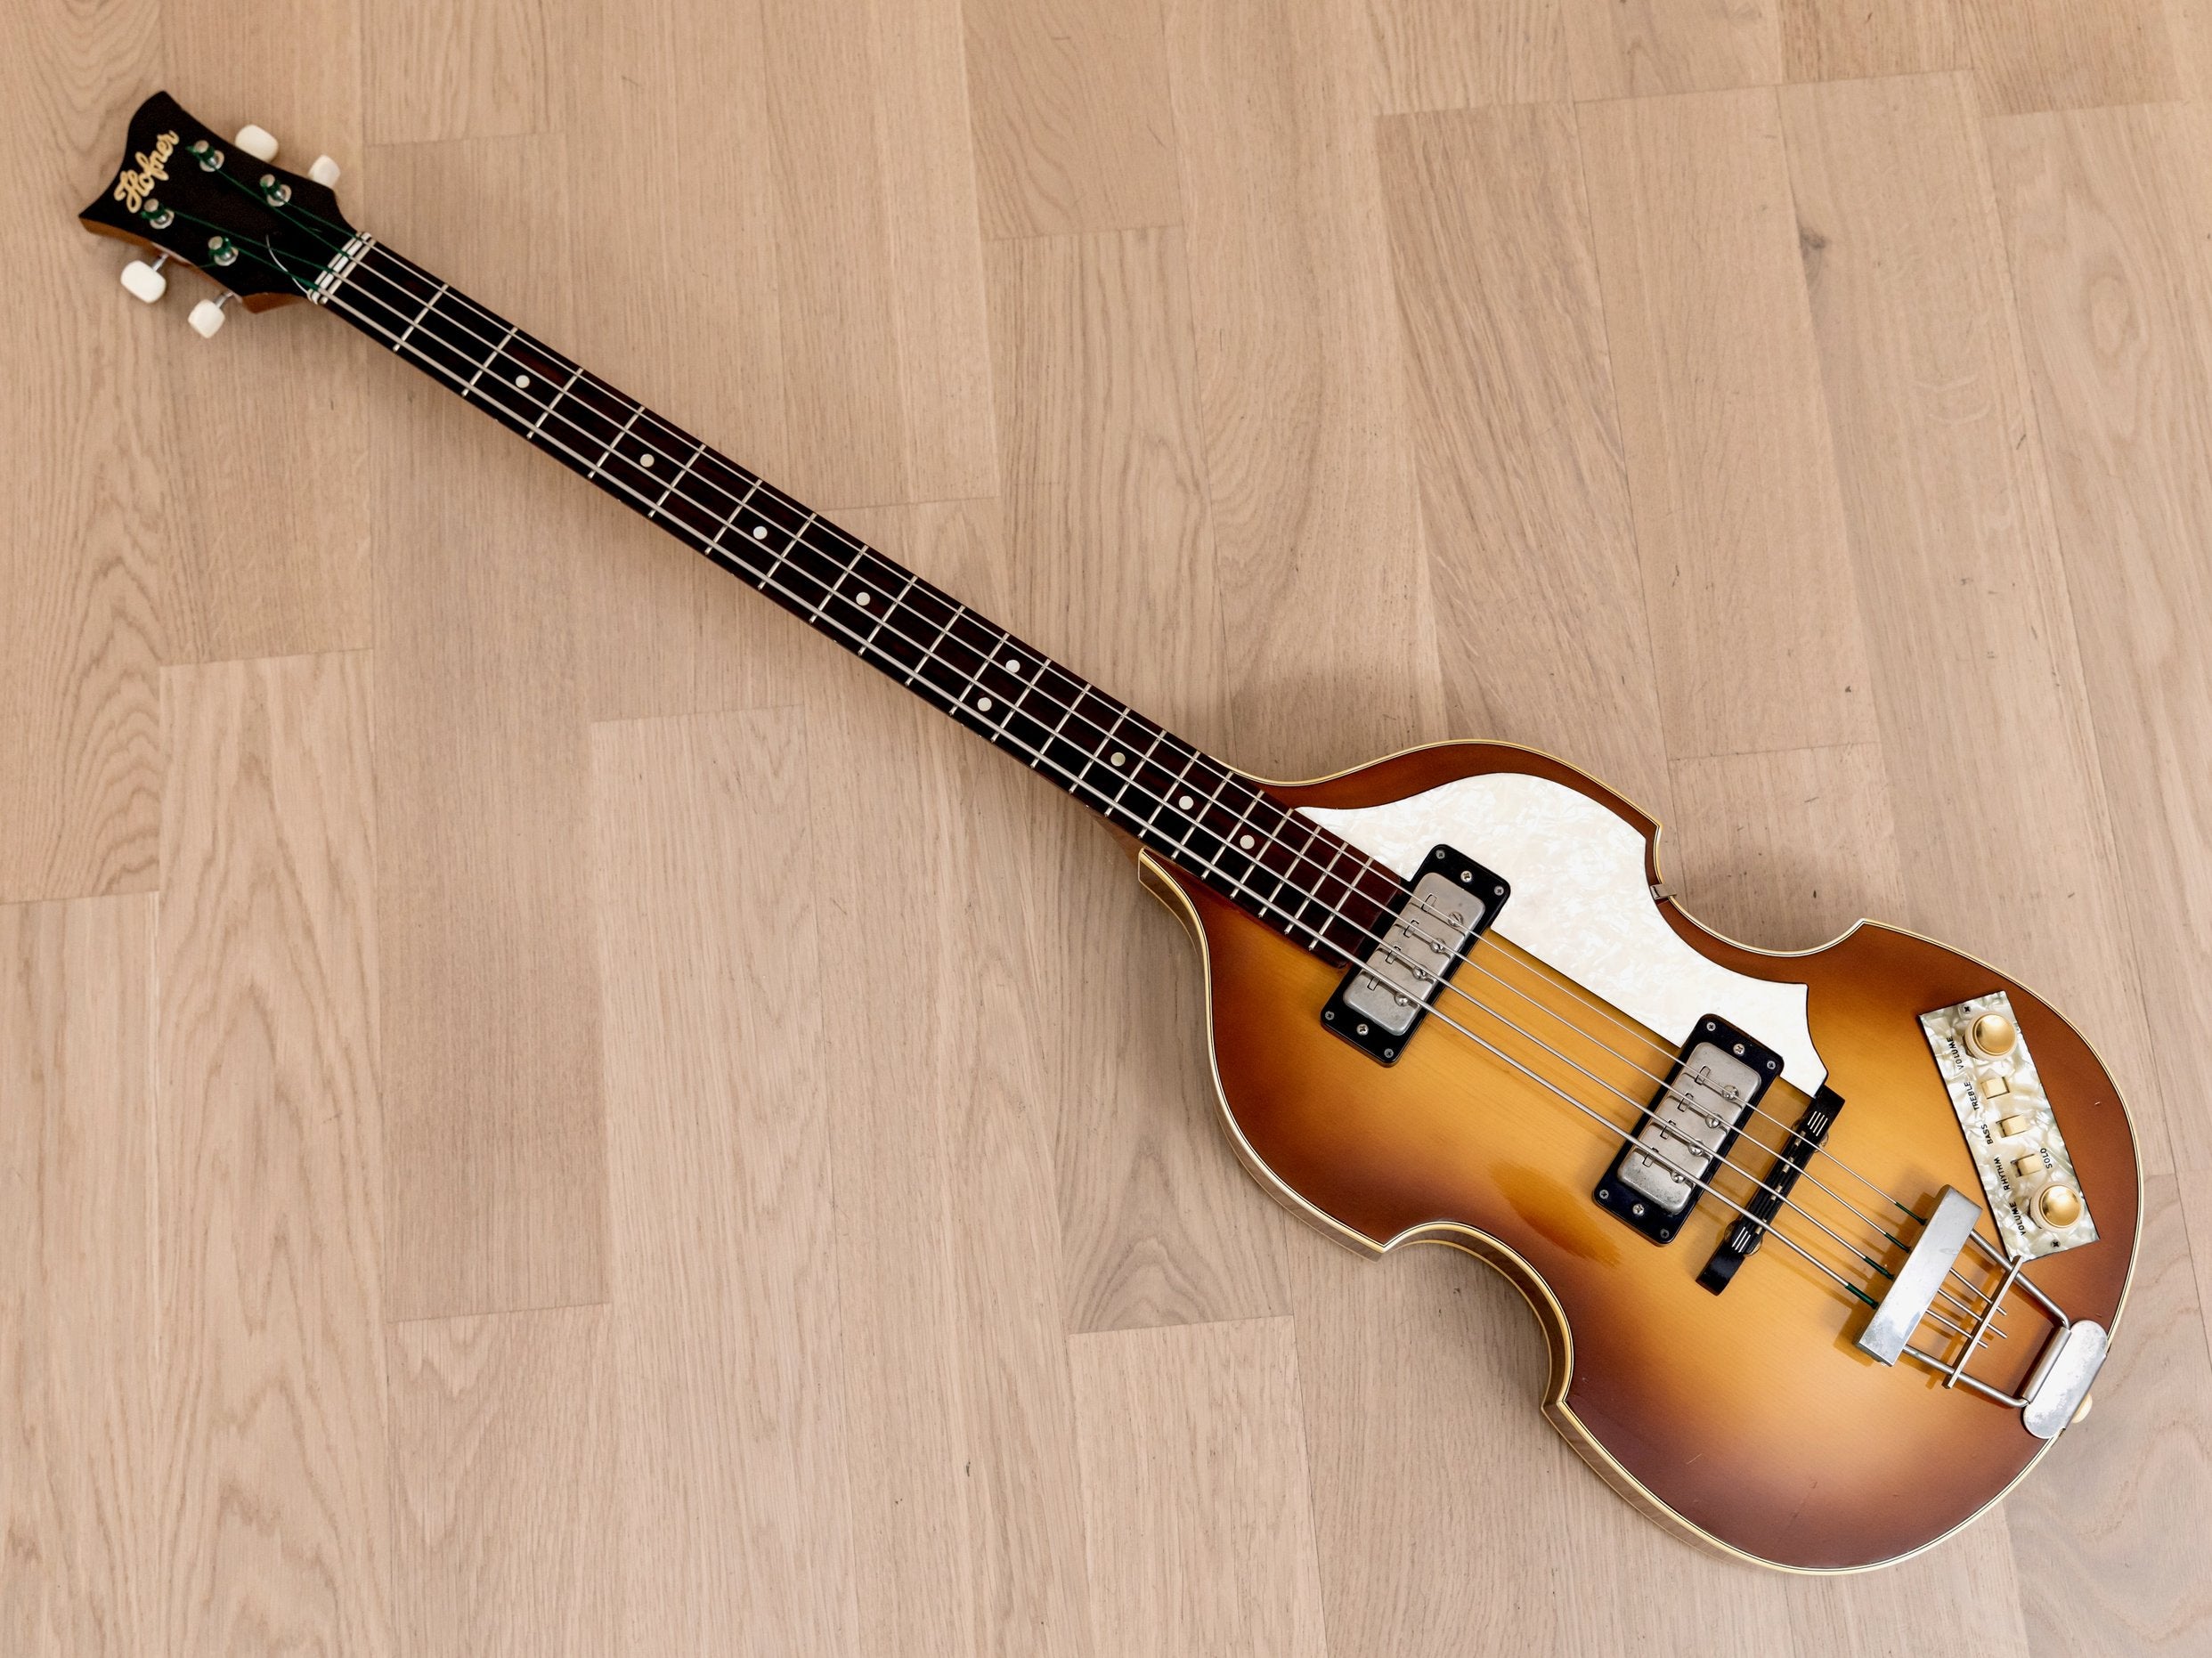 1978 Hofner 500/1 Beatle Bass Vintage Violin Bass '60s Spec w/ Staple Pickups, Case